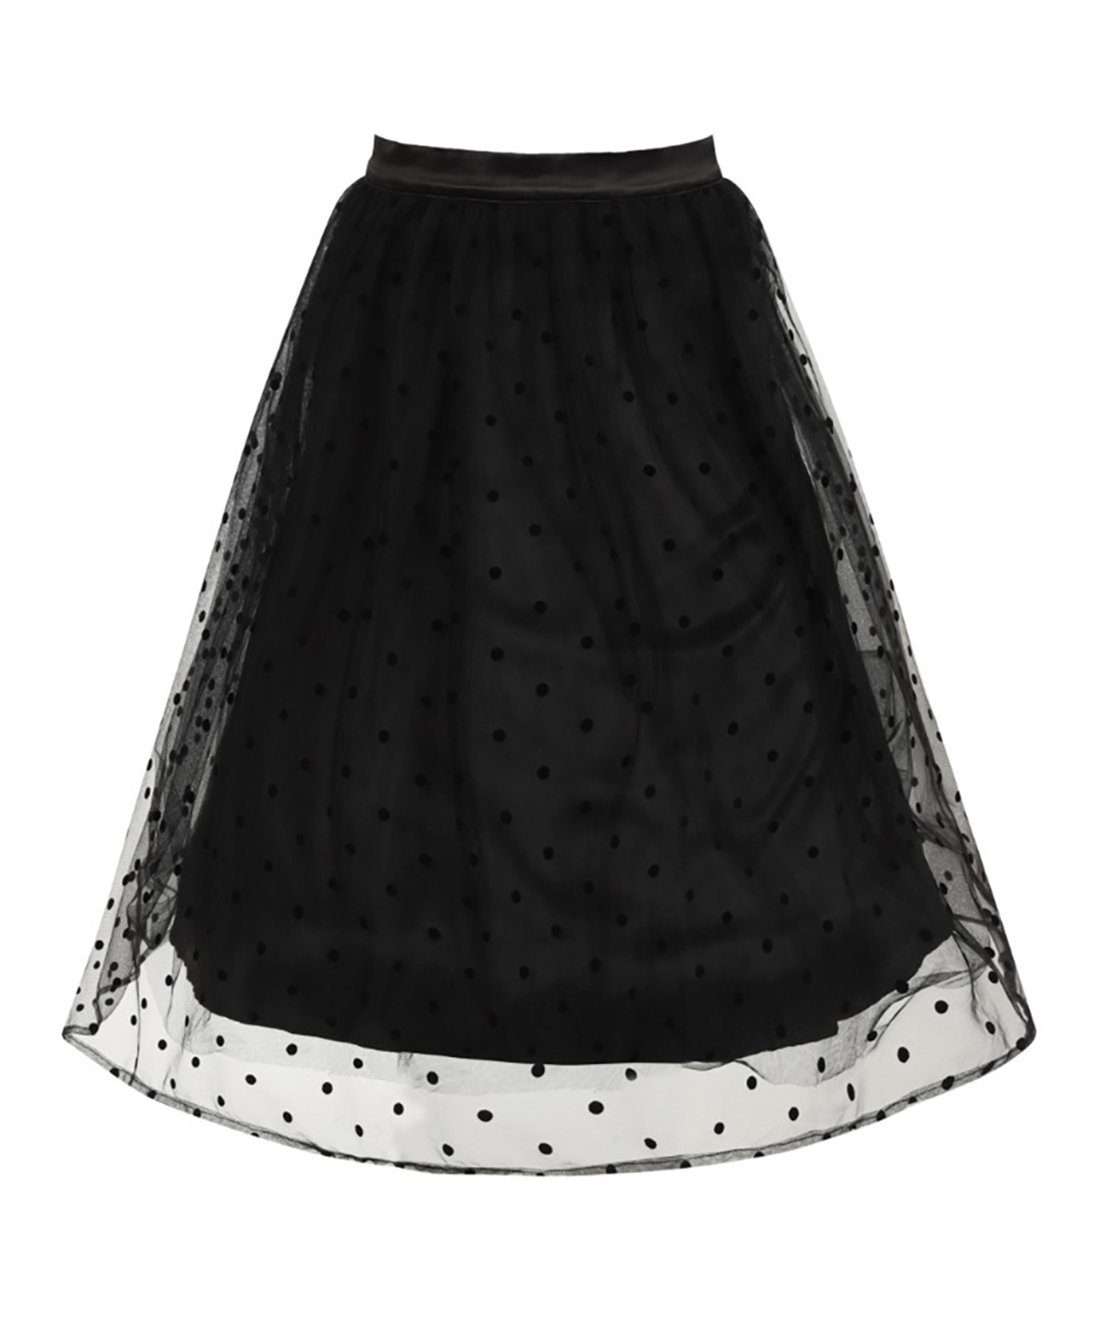 Юбка-трапеция Amandine 50-е годы, тюлевая юбка, ретро, винтажная юбка, кружевная